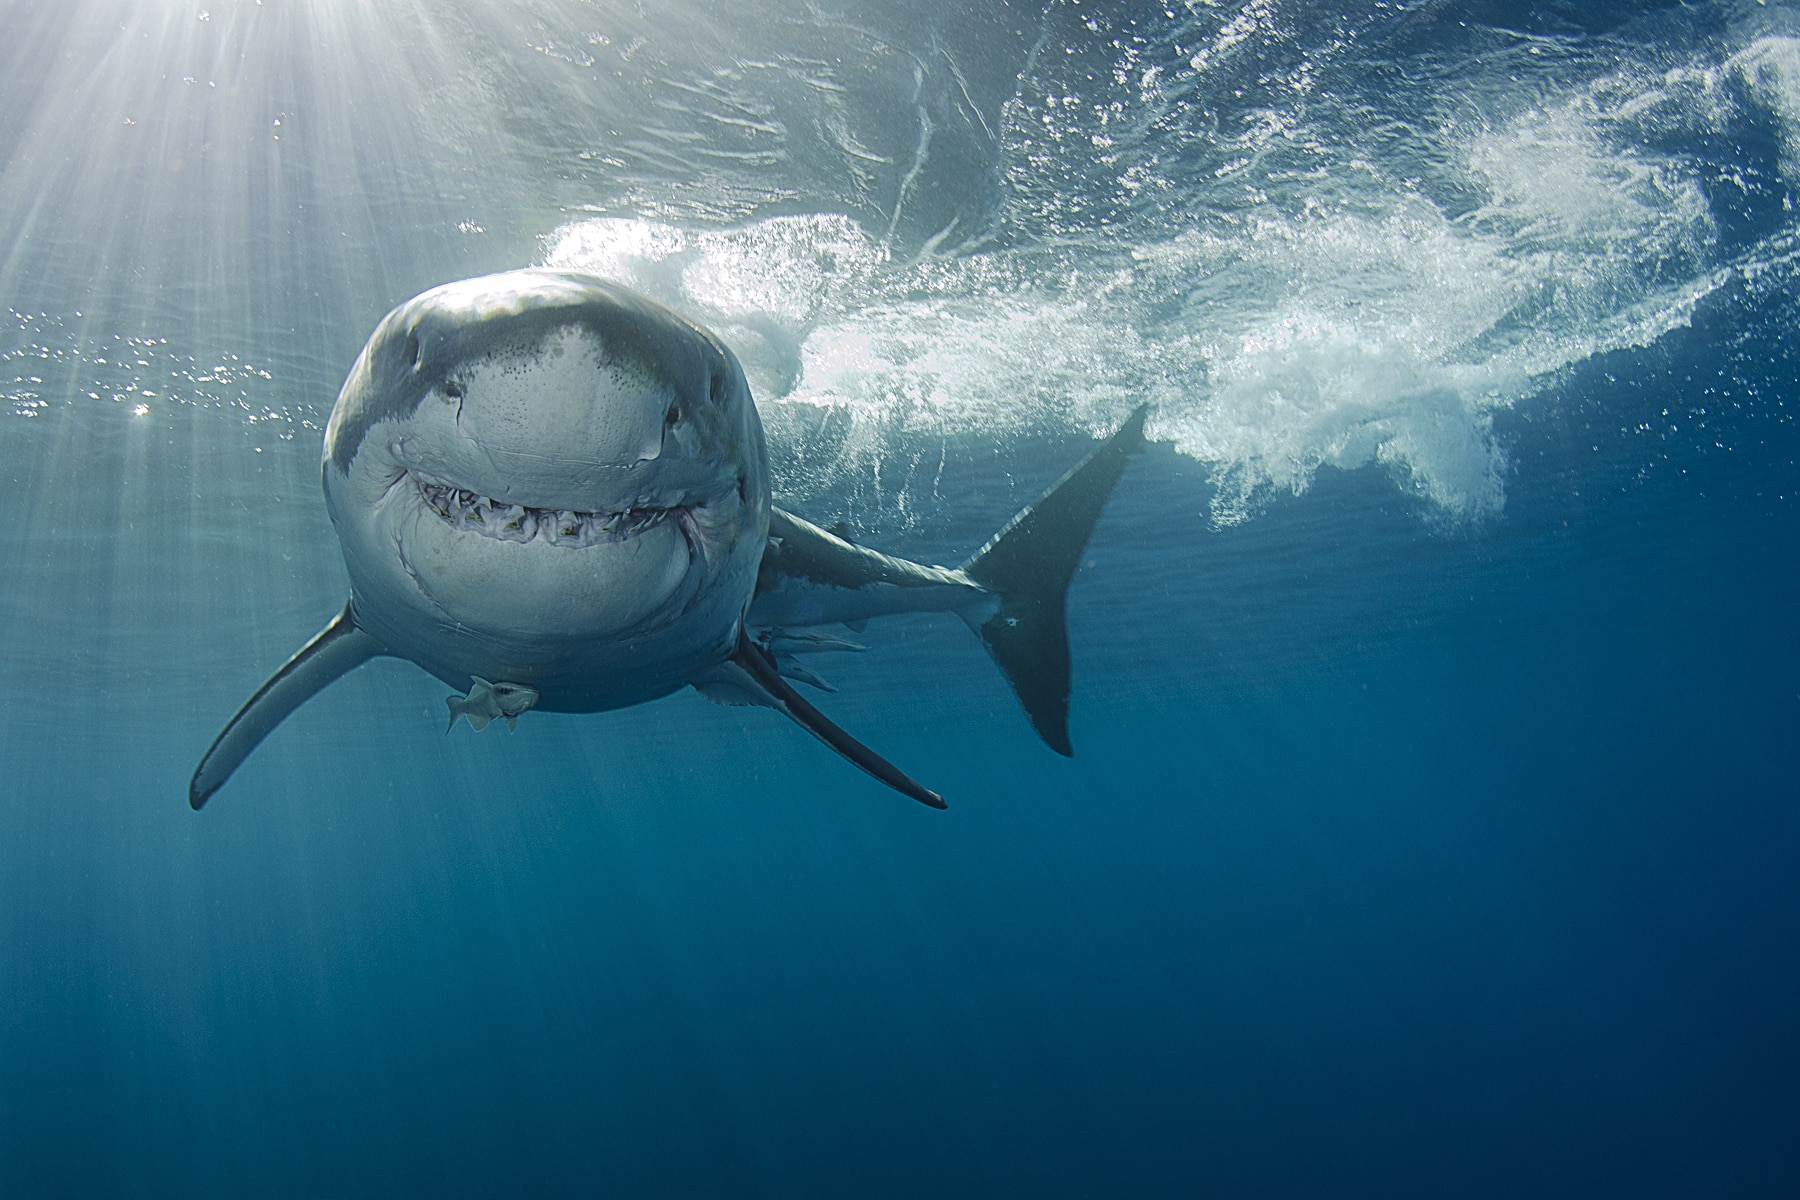 https://wanderingourworld.com/tiburones-en-el-golfo-de-mexico-atacan-especies/